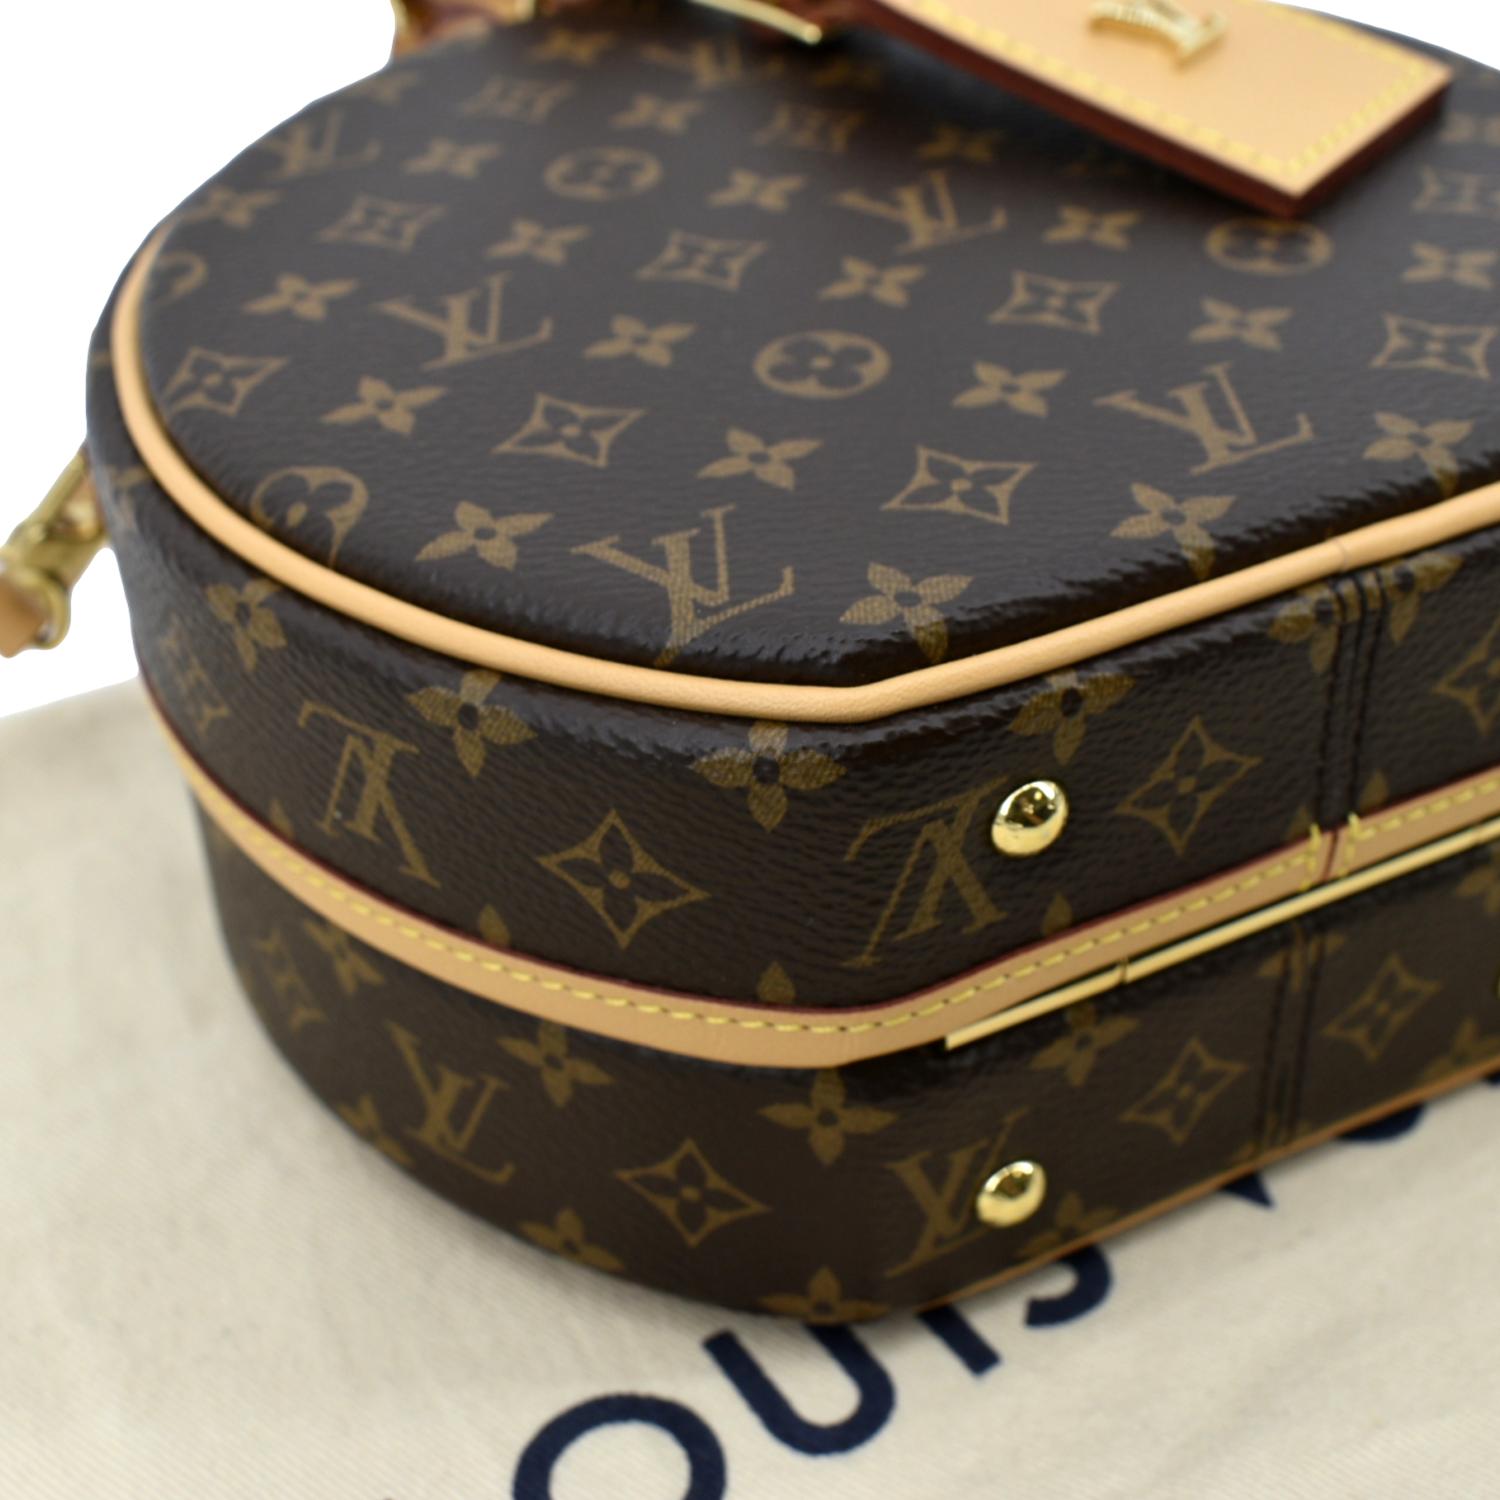 LV PETITE BOITE CHAPEAU  Luxury leather bag, Luxury bags, Handbag